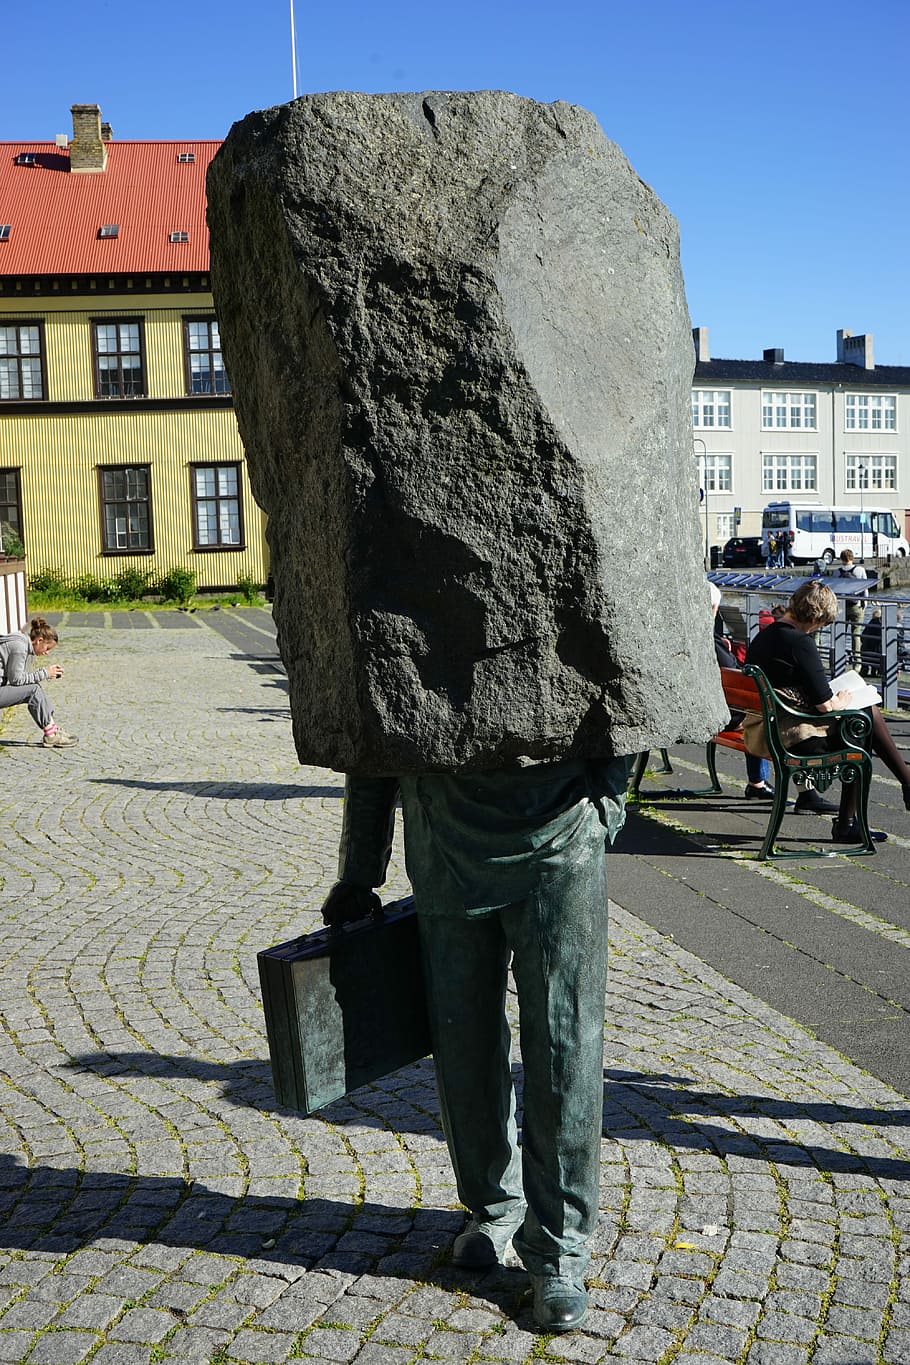 Sculpture, Headless, Stone, Reykjavik, artwork, iceland, architecture, built structure, city, building exterior